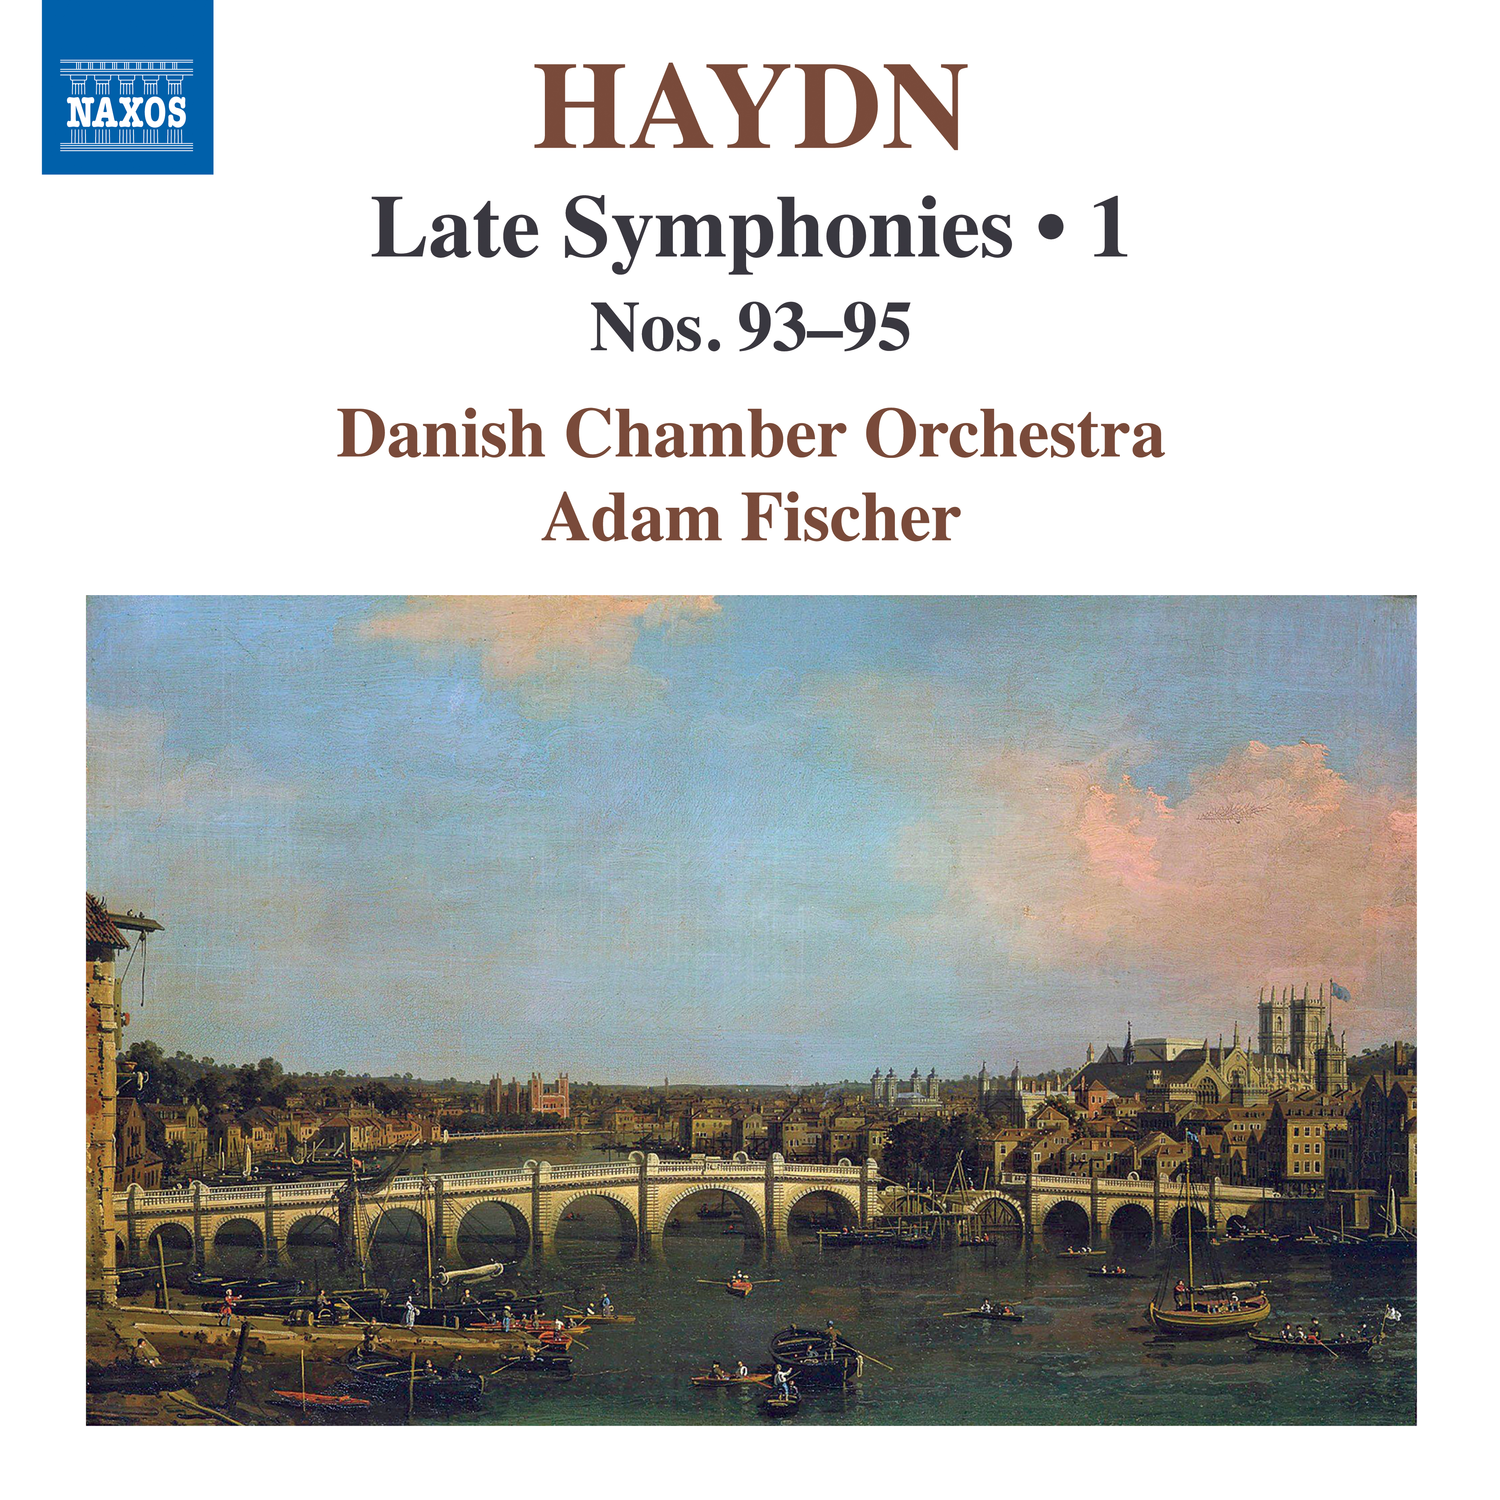 034 Haydn late symphonies vol 1